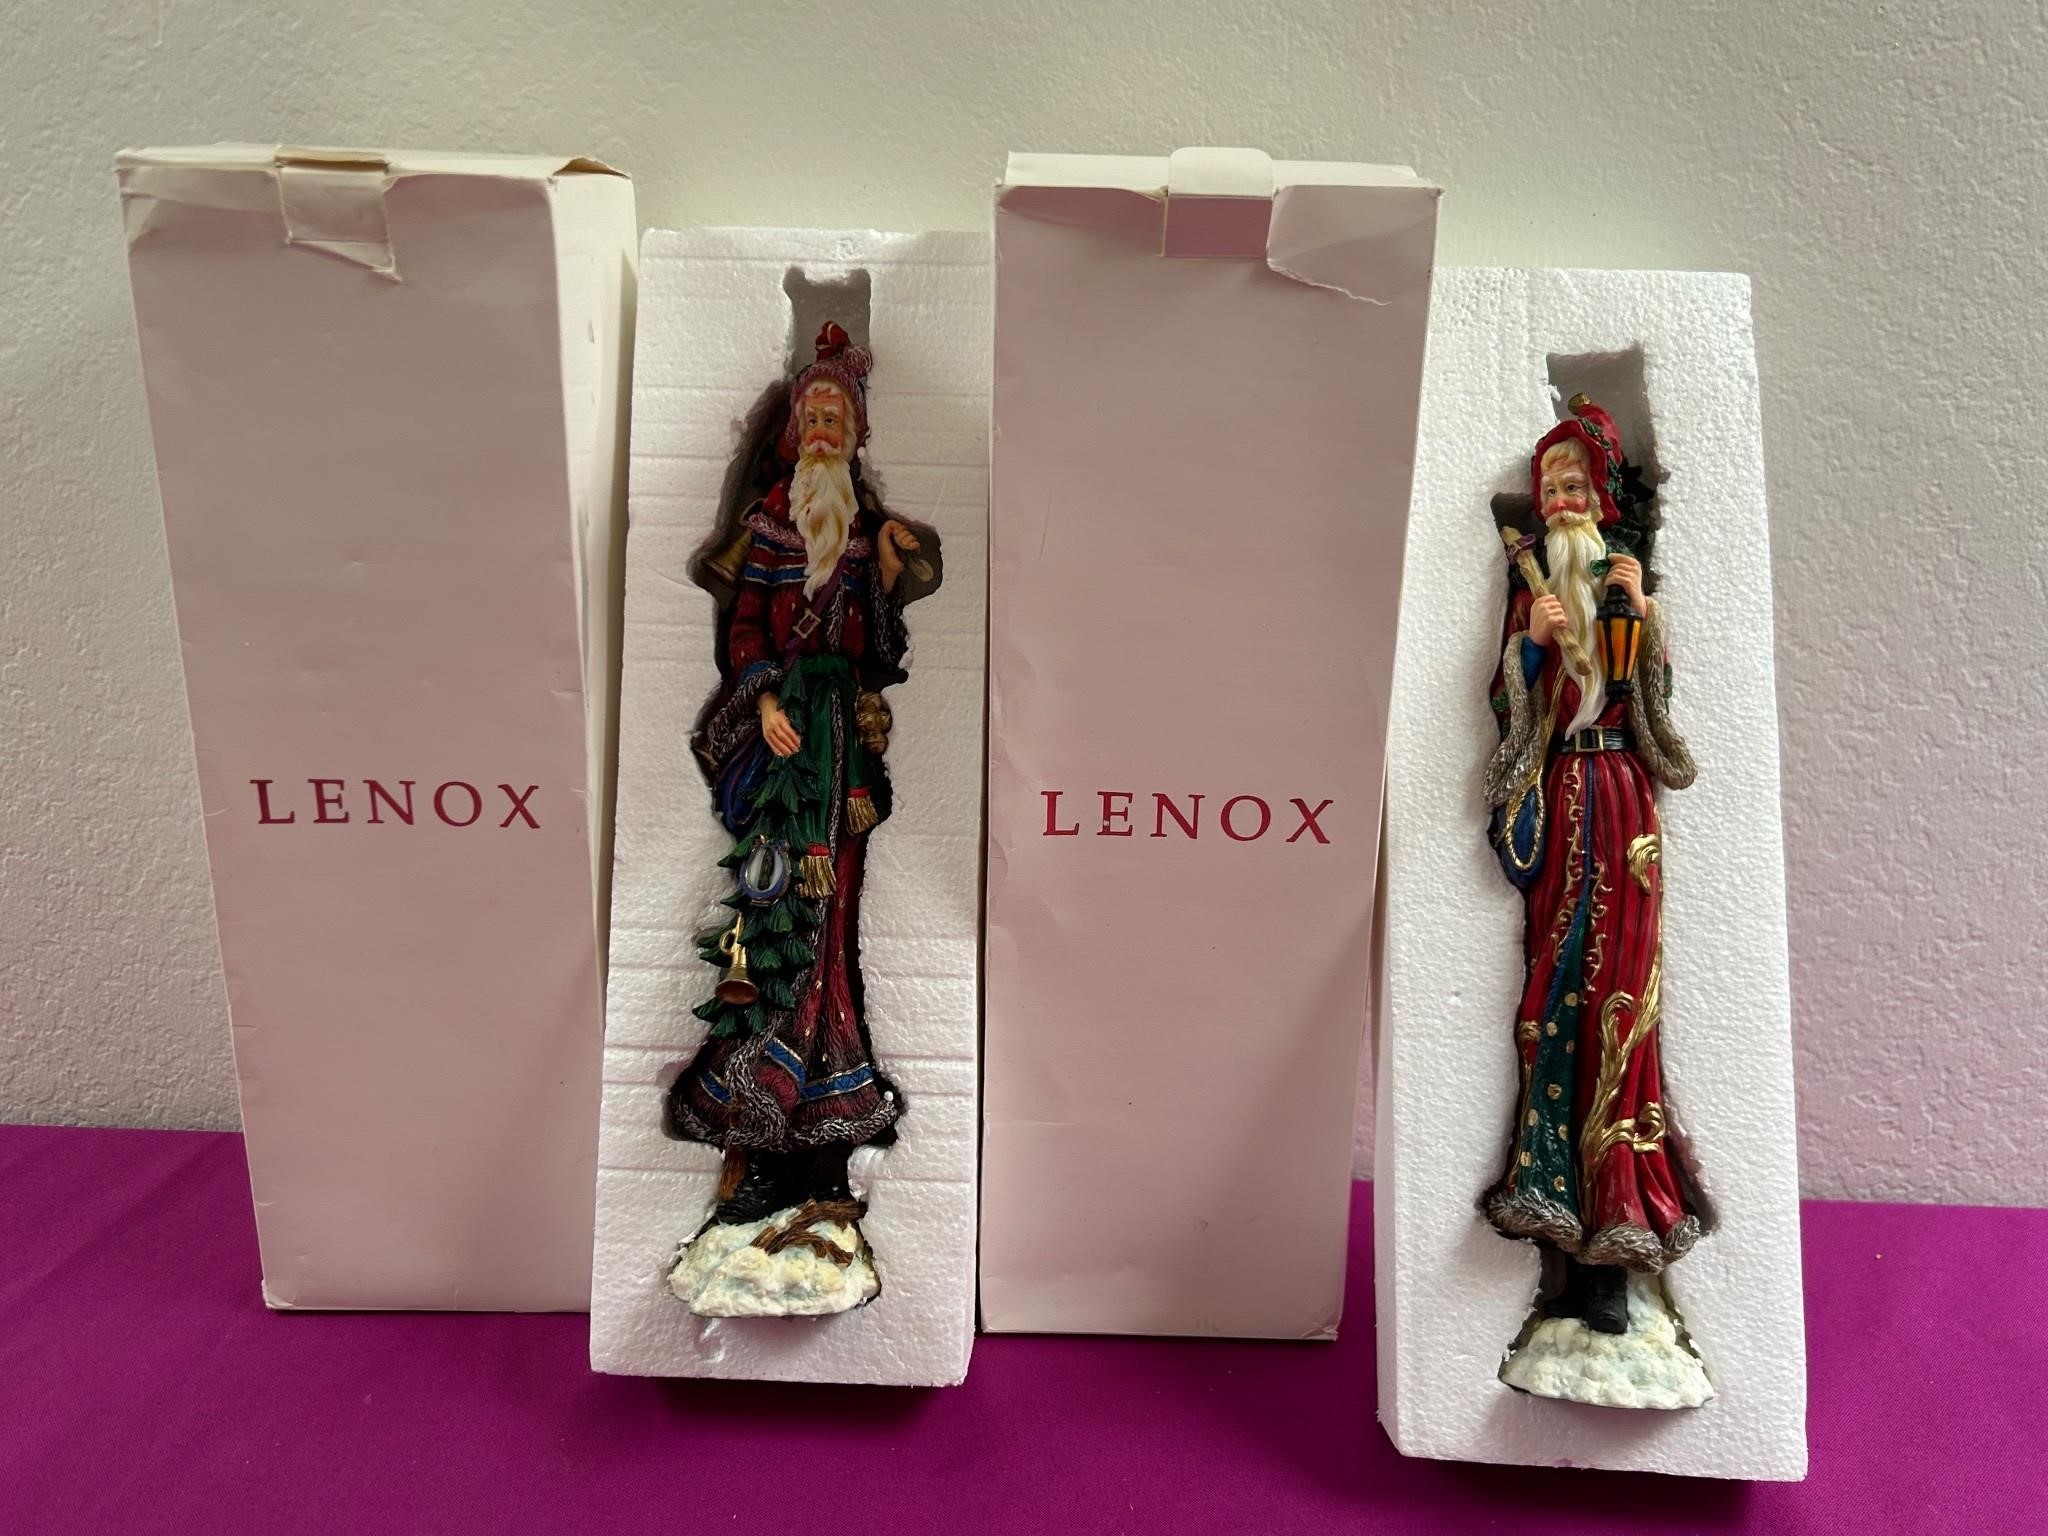 Lenox “Old World Santa” Pencil Santa Figurines